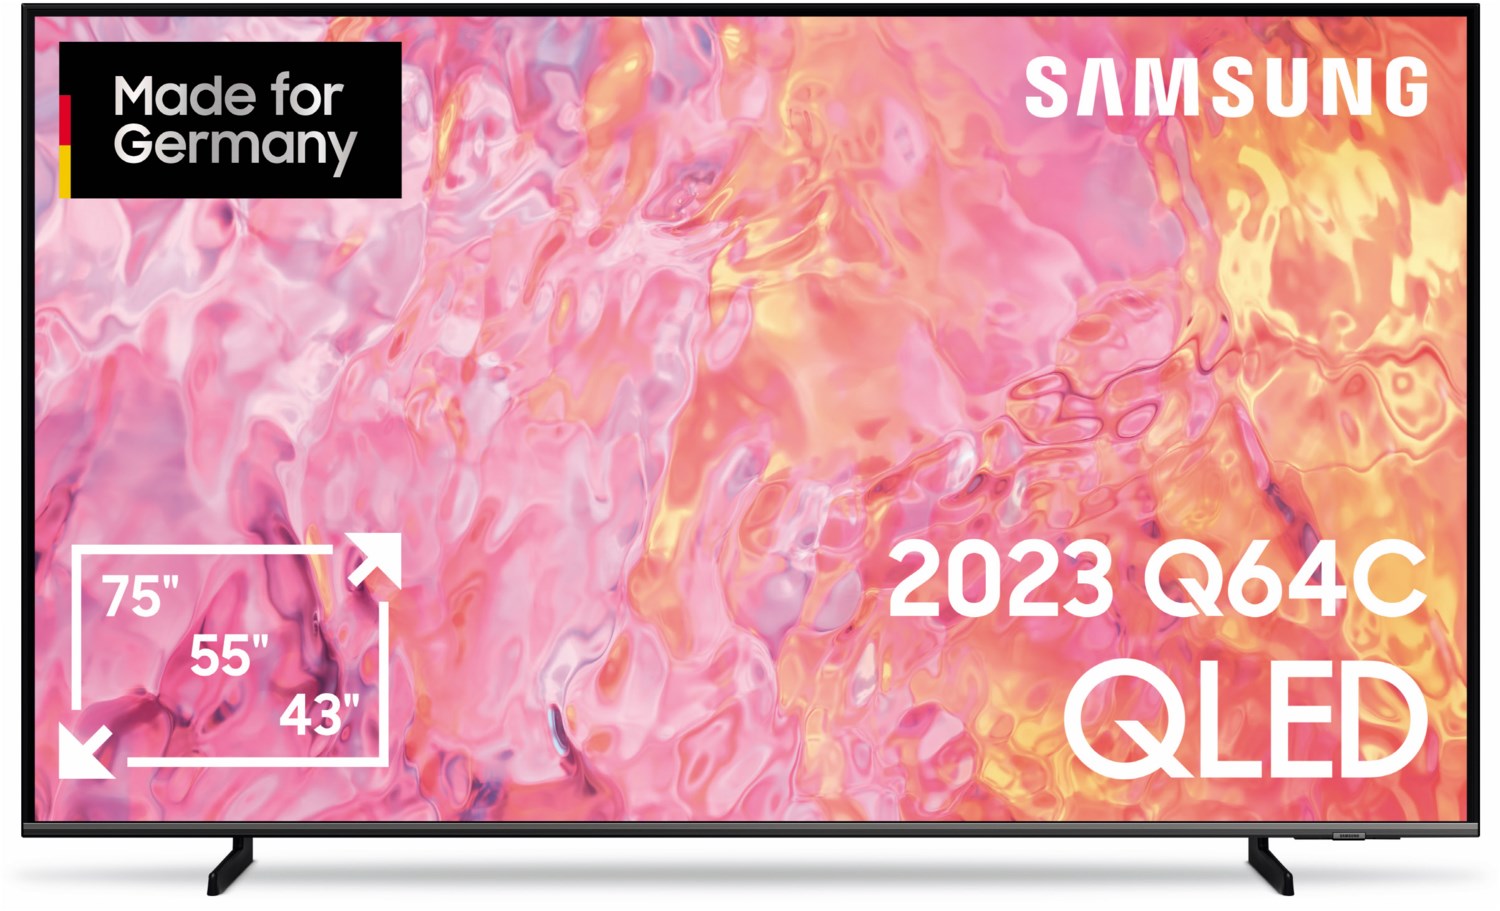 Samsung QLED TV UHD 4K 65 Zoll (163 cm) schwarz